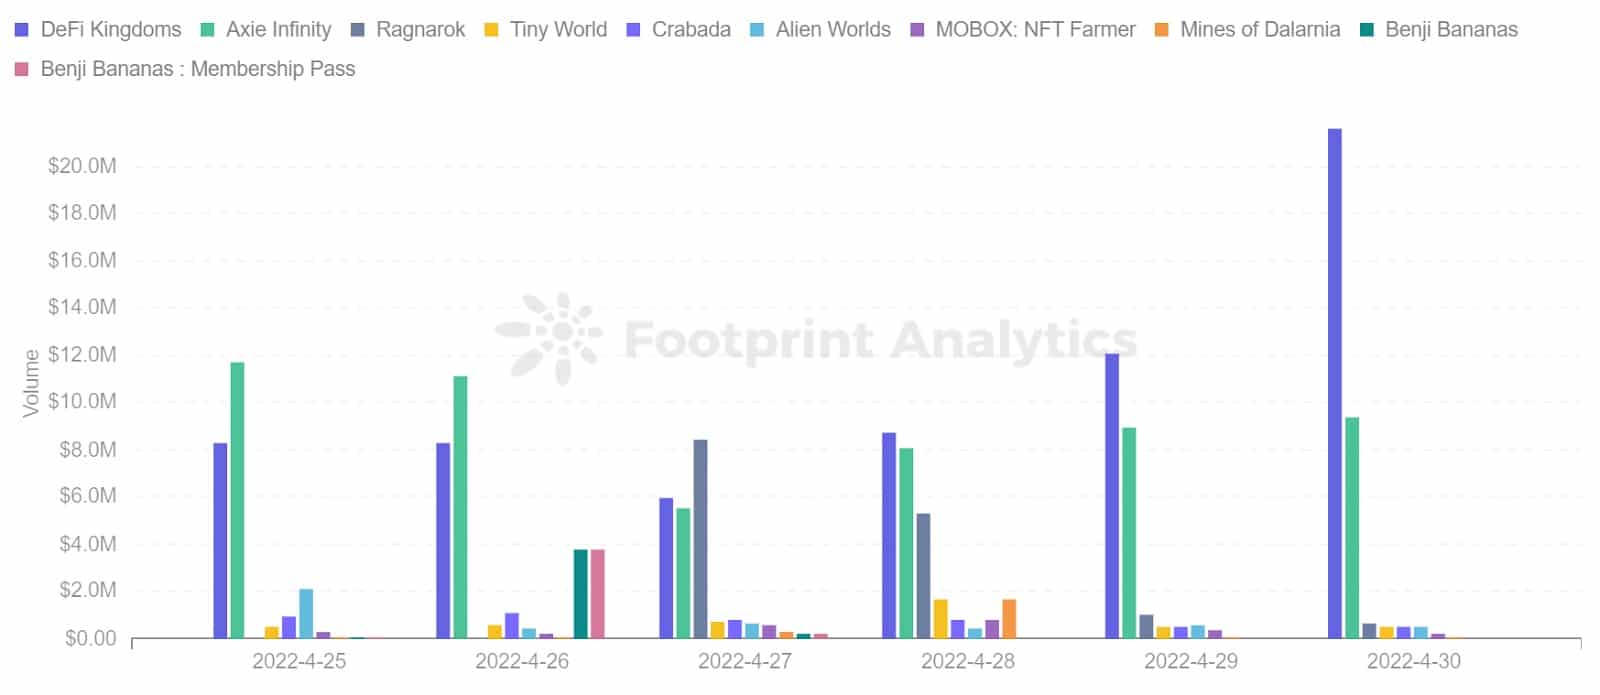 Footprint Analytics - Top 10 Games Ranking by Volume